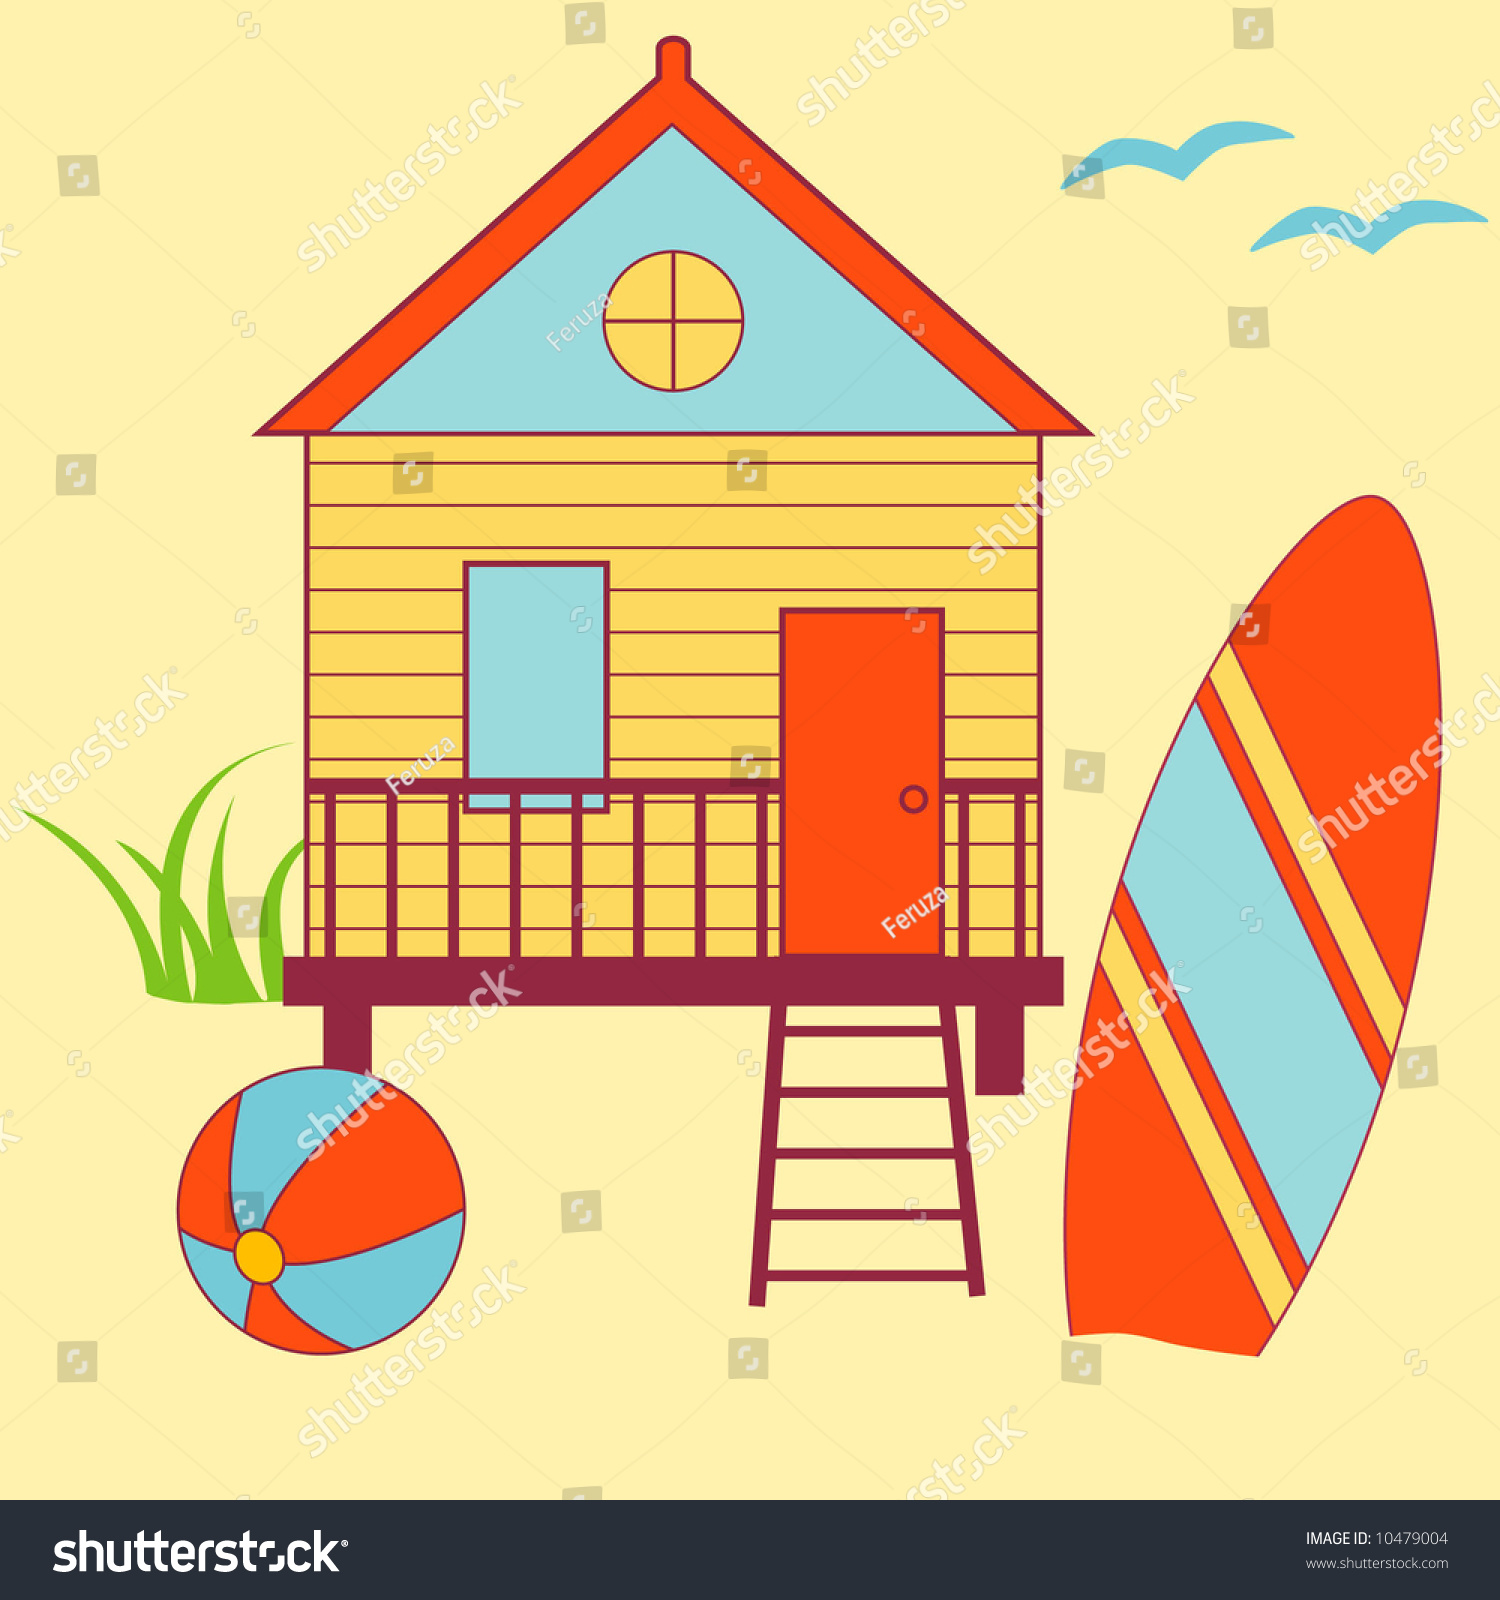 beach house clip art images - photo #24